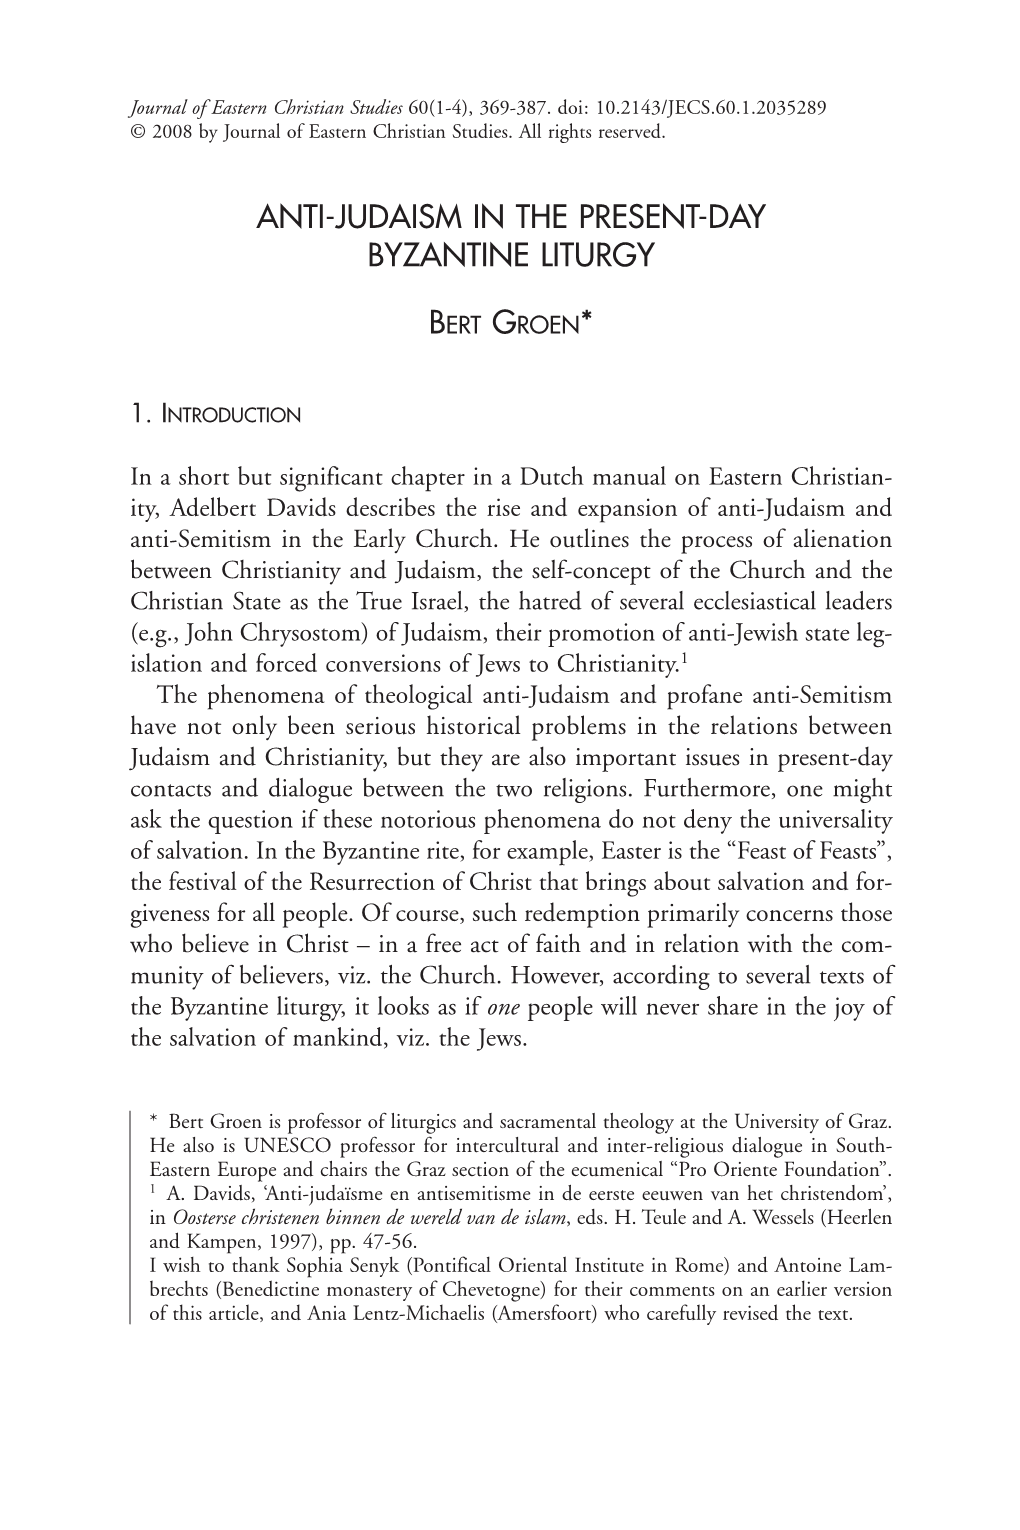 Anti-Judaism in the Present-Day Byzantine Liturgy